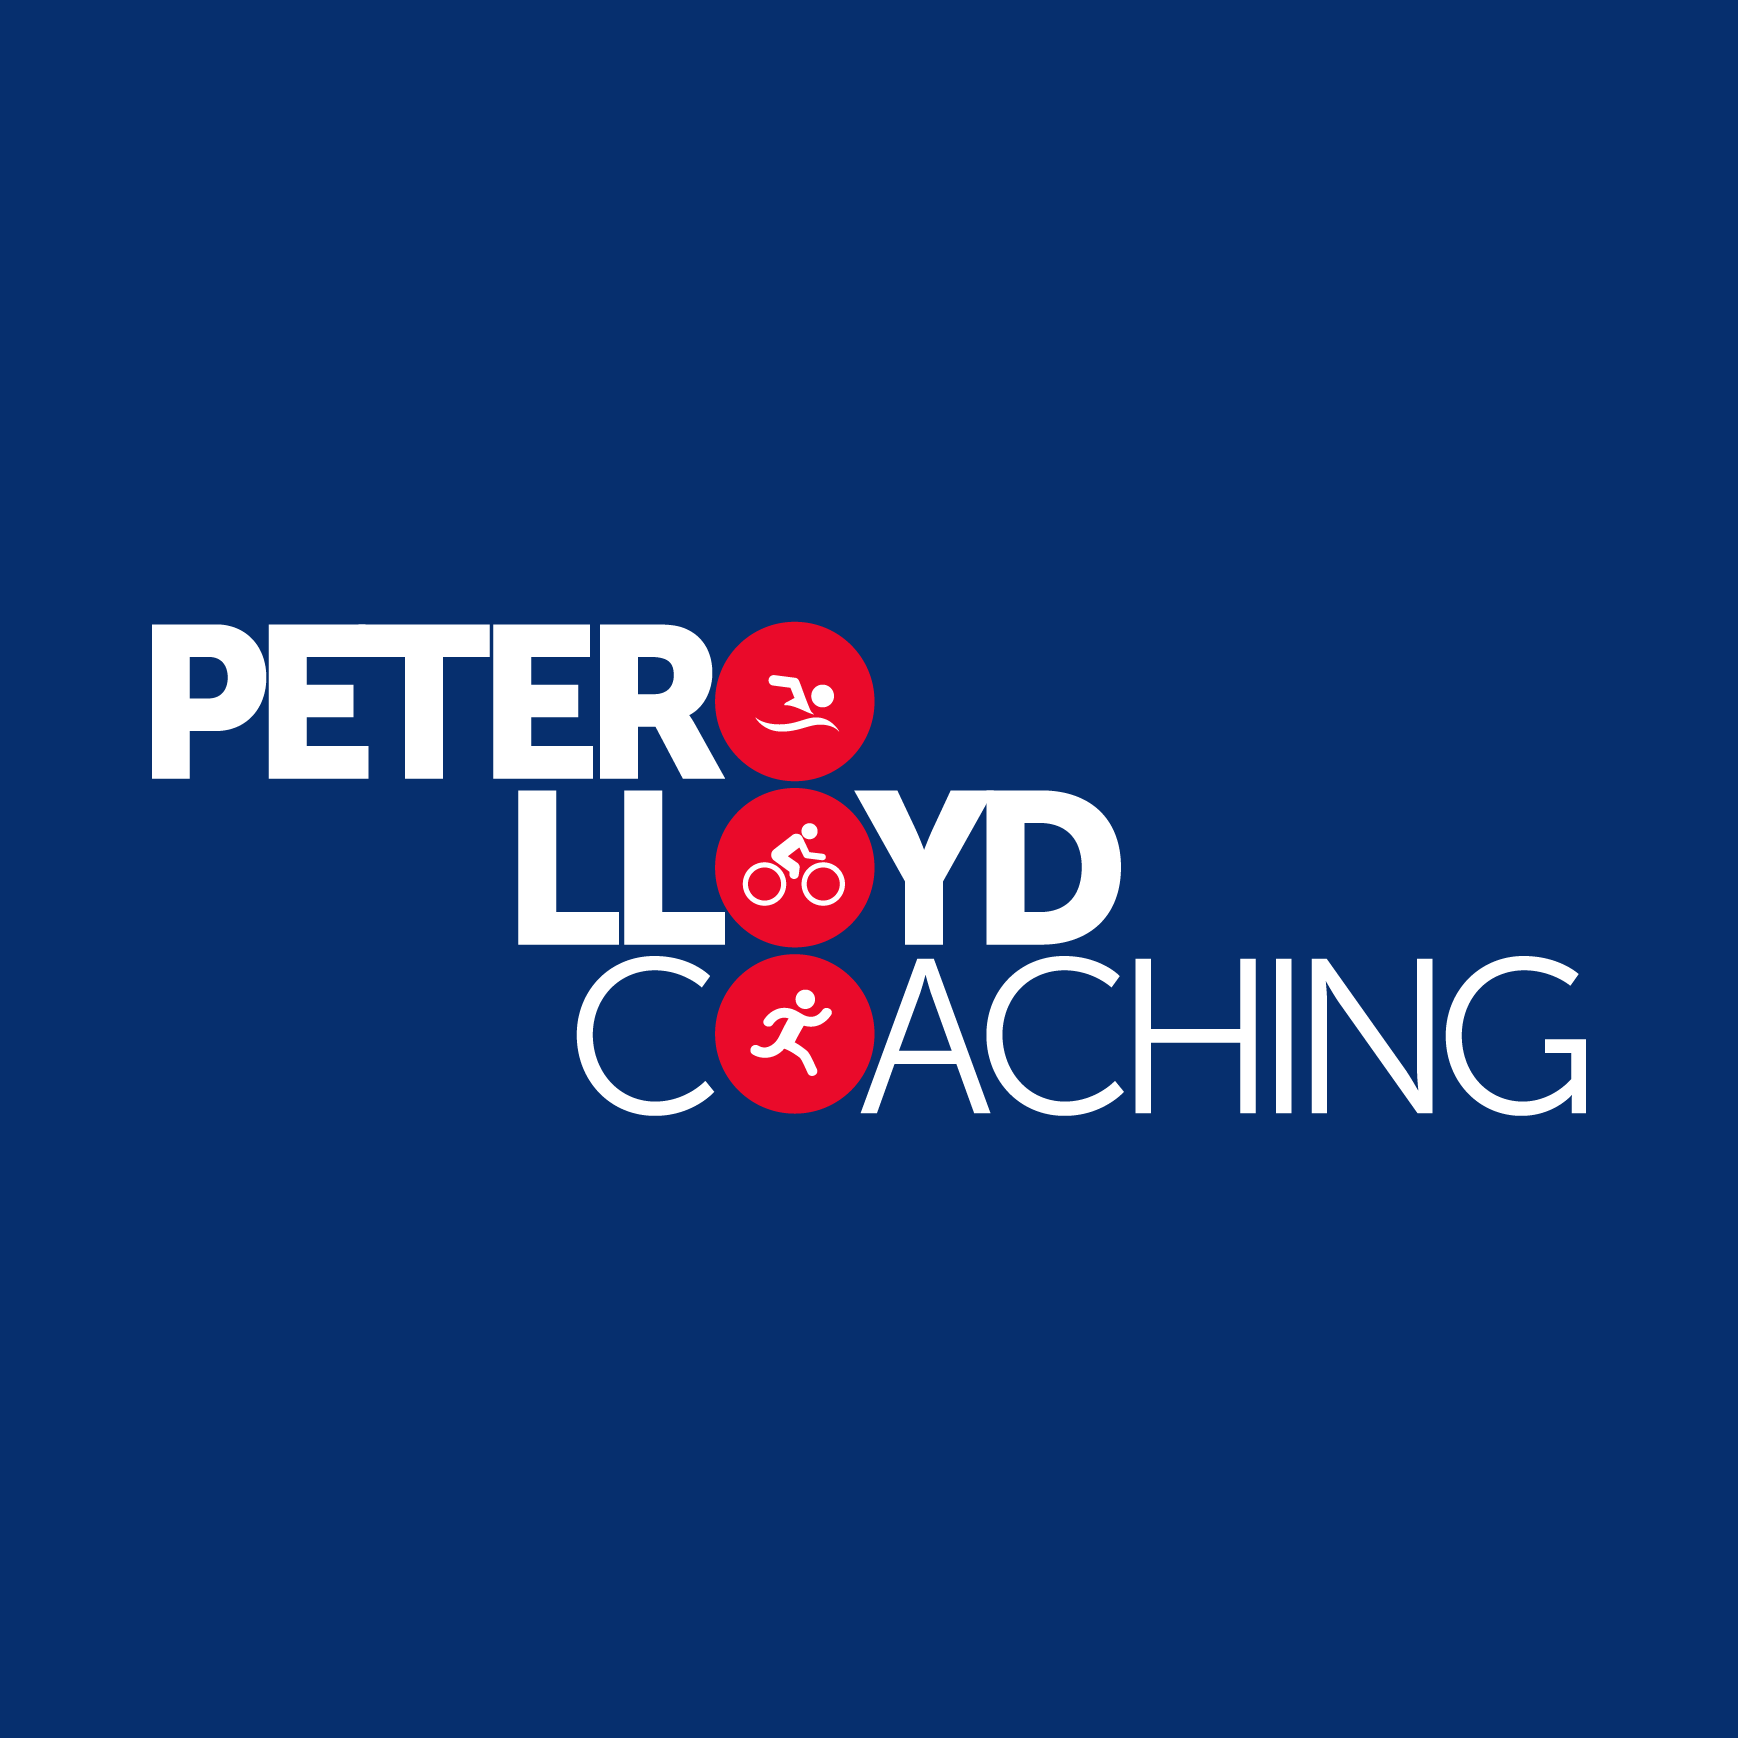 Club Image for PETER LLOYD COACHING